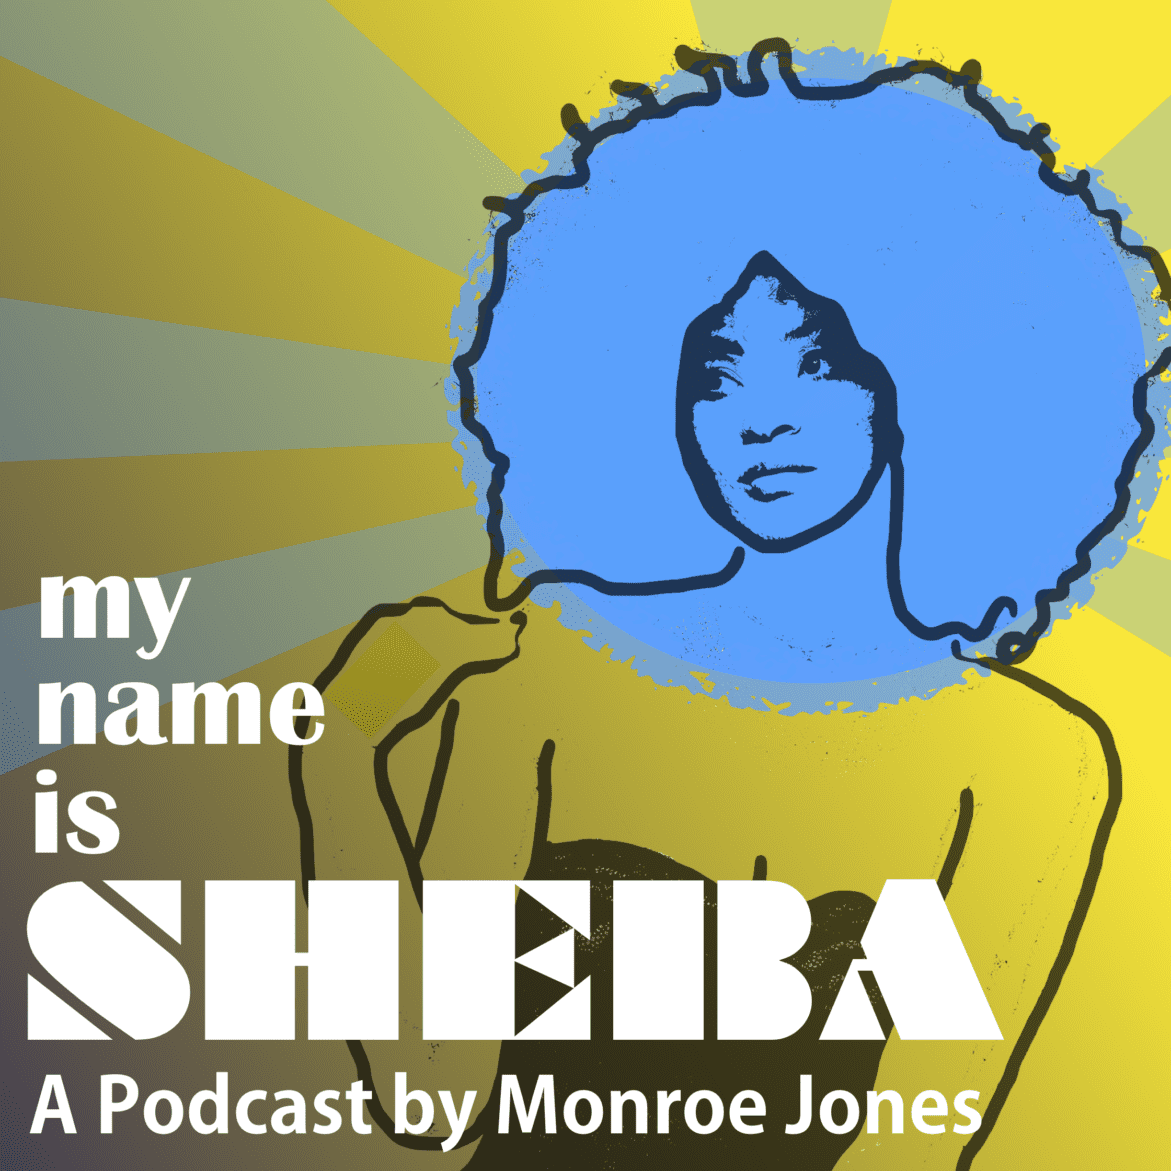 Black Podcasting - Chapter 9: Sheba Strikes A Chord